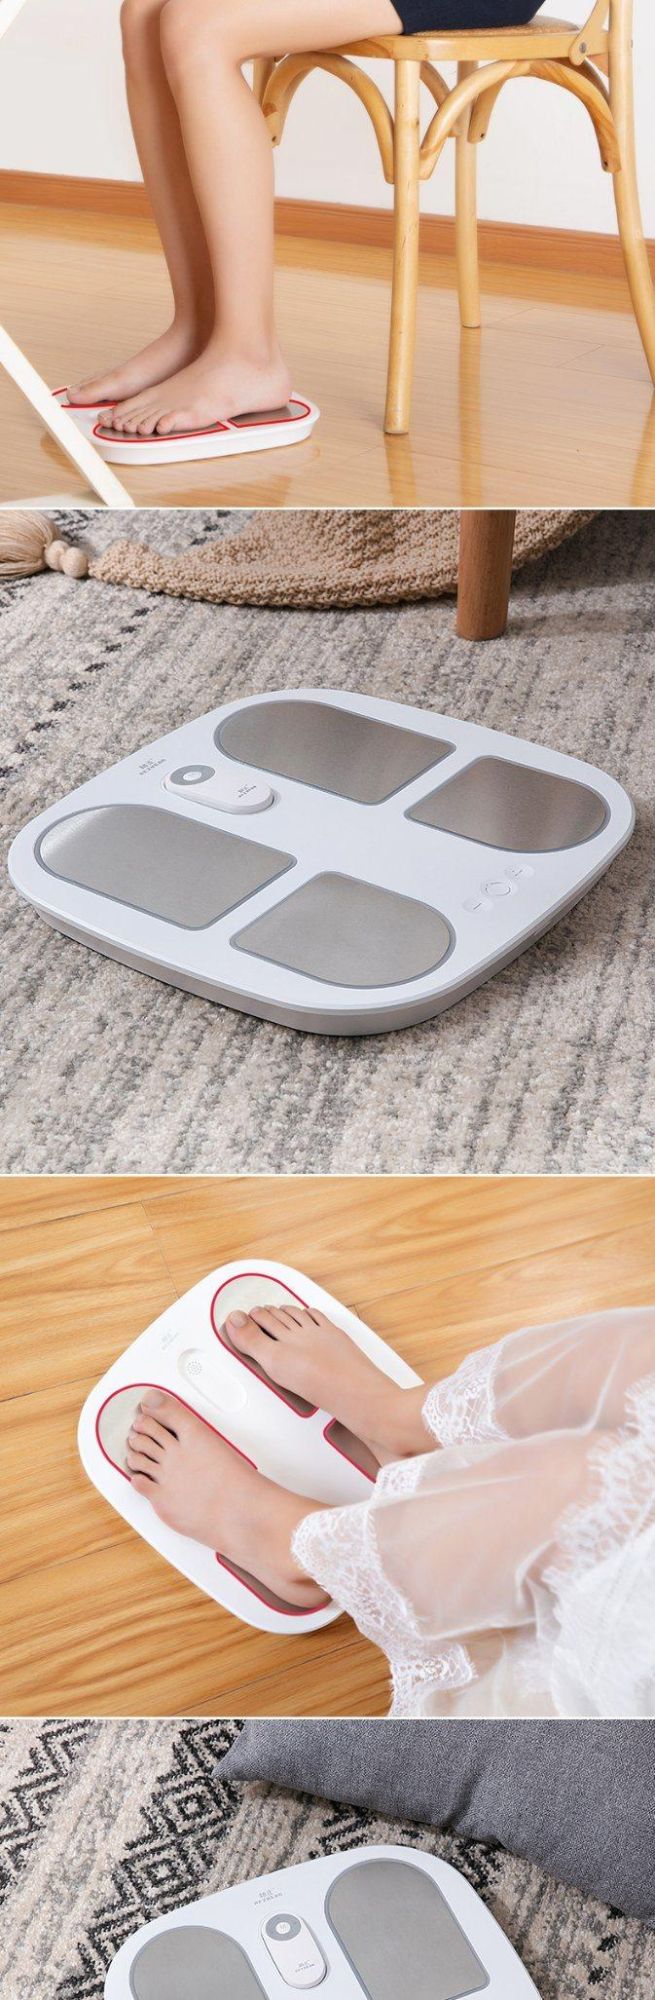 Hezheng New Design EMS Pulse Deep Shiatsu Kneading Machine Electric Foot Massager with Heating Function